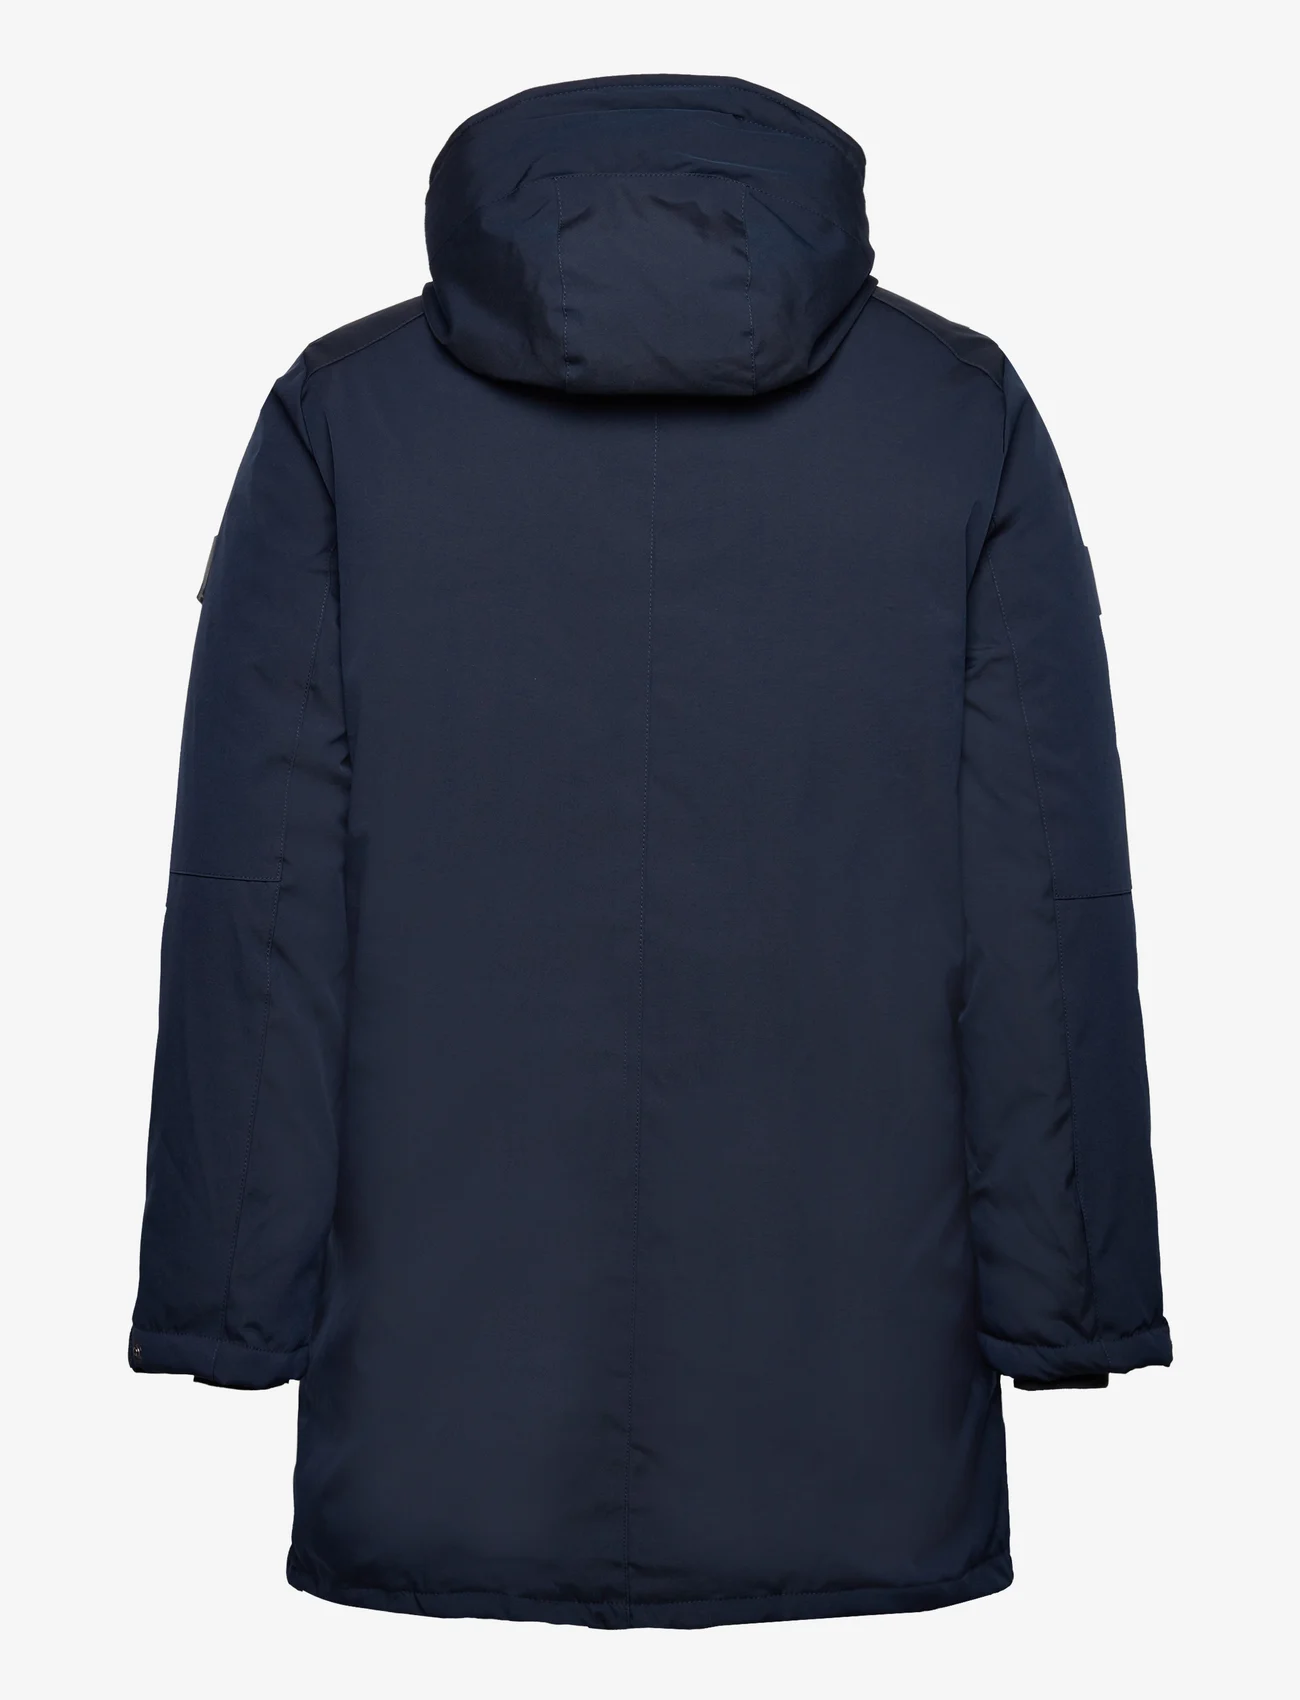 Garcia - men`s outdoor jacket - winter jackets - blue - 1